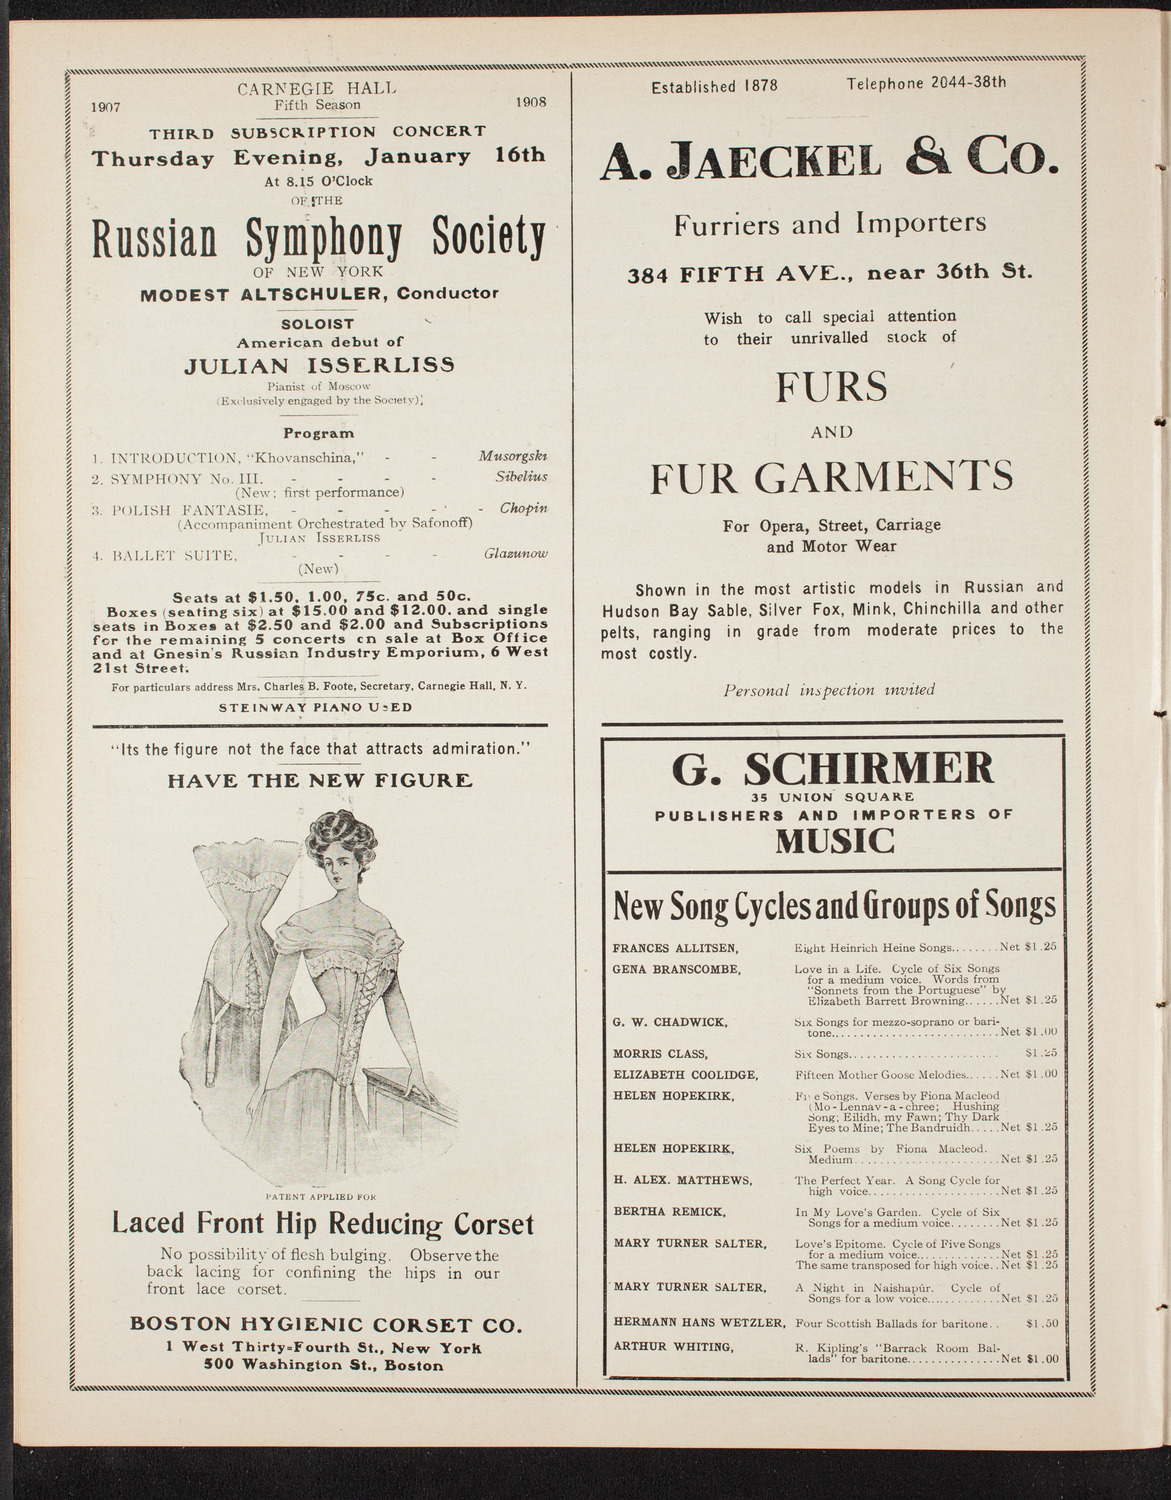 New York Philharmonic, December 14, 1907, program page 8